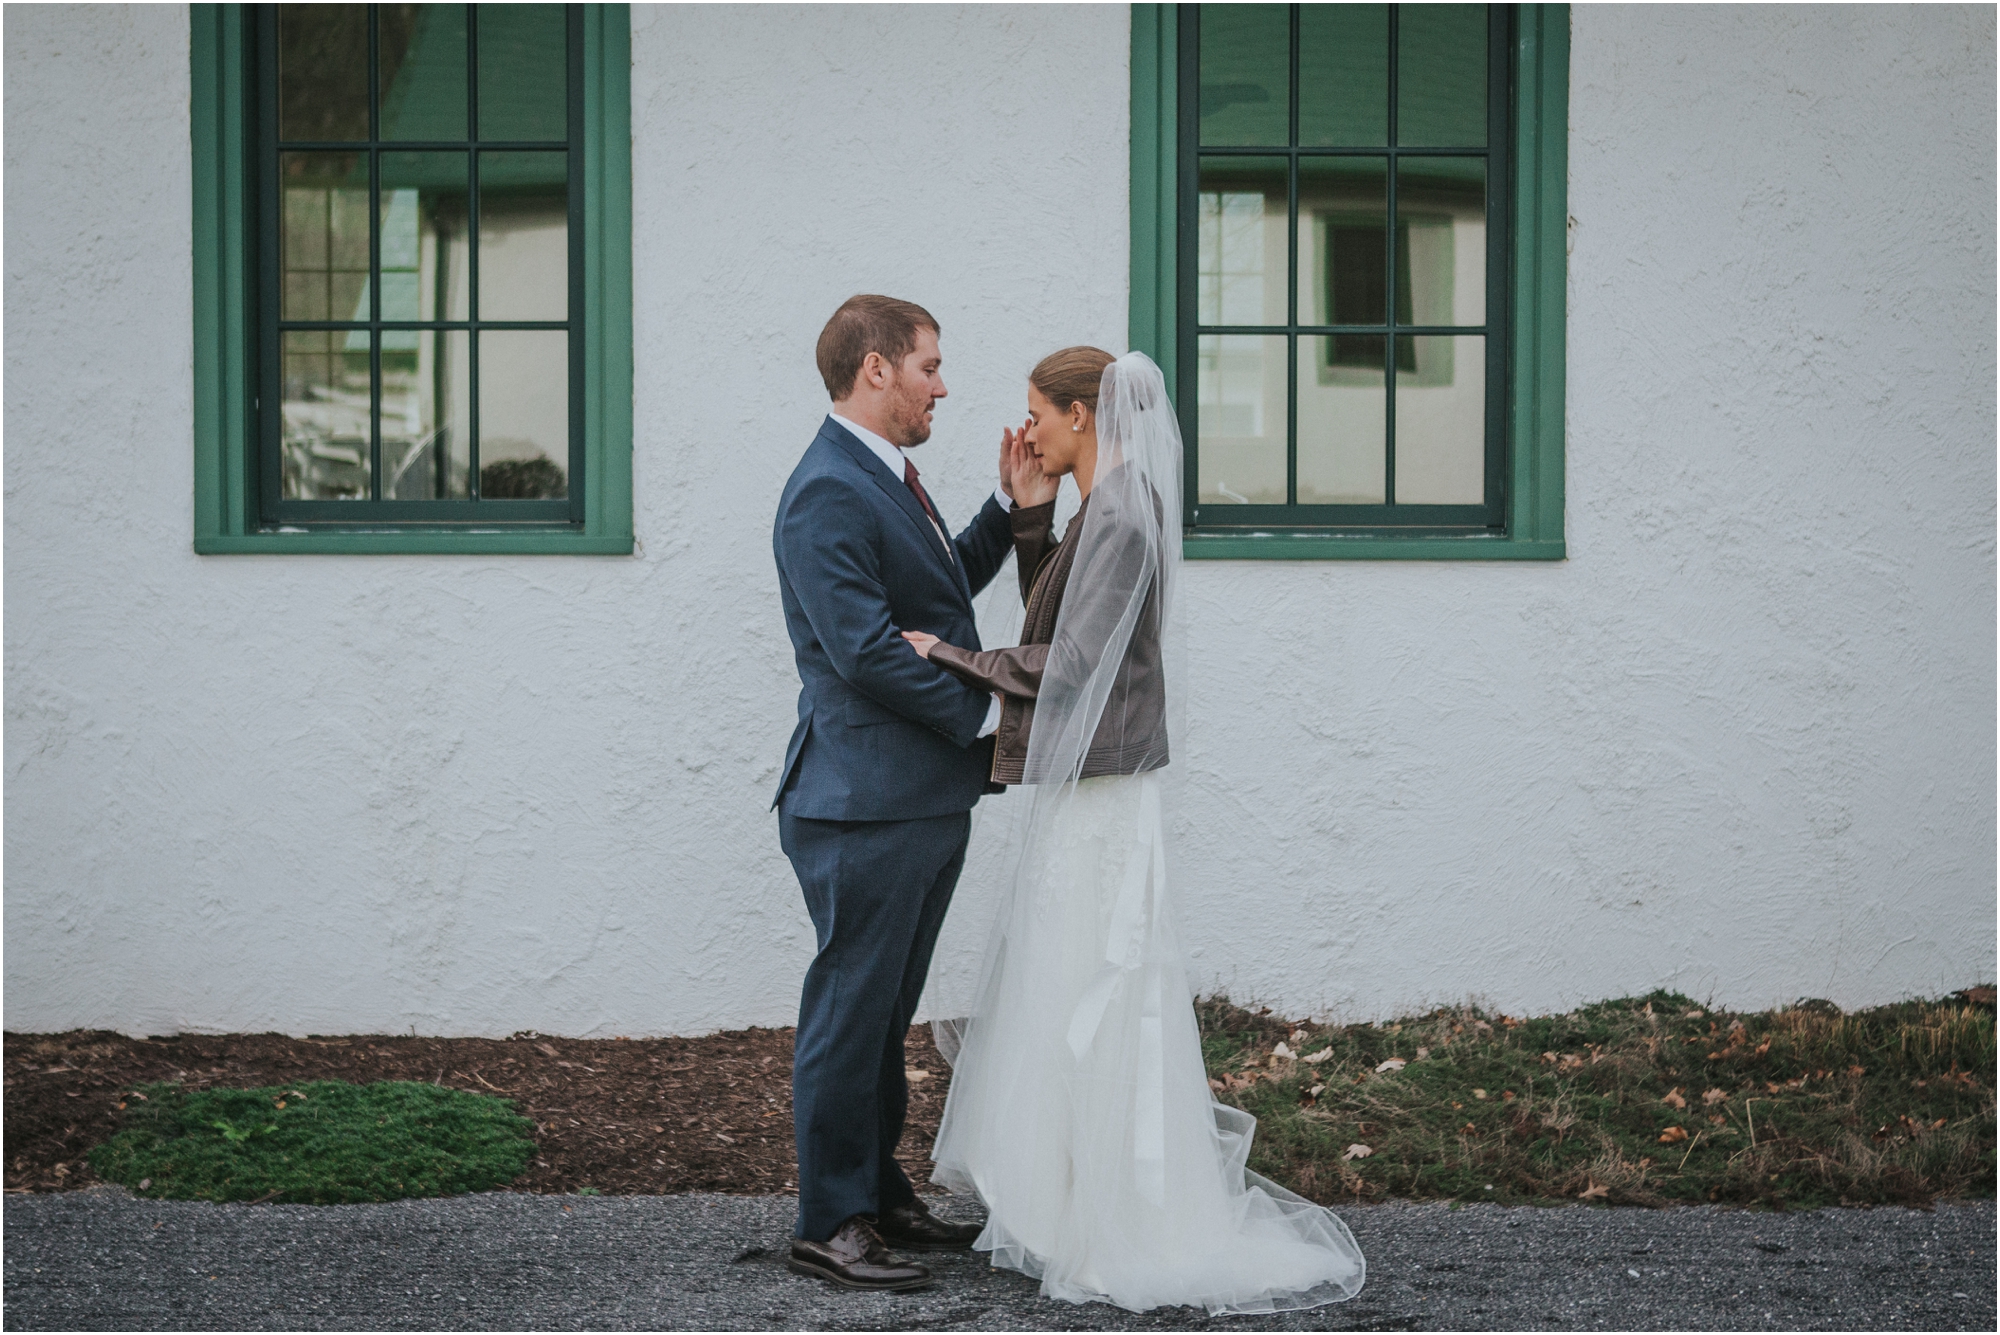 warm-springs-old-dairy-virginia-rustic-wedding-northeast-tennessee-elopement-adventuruous-photographer-katy-sergent_0028.jpg